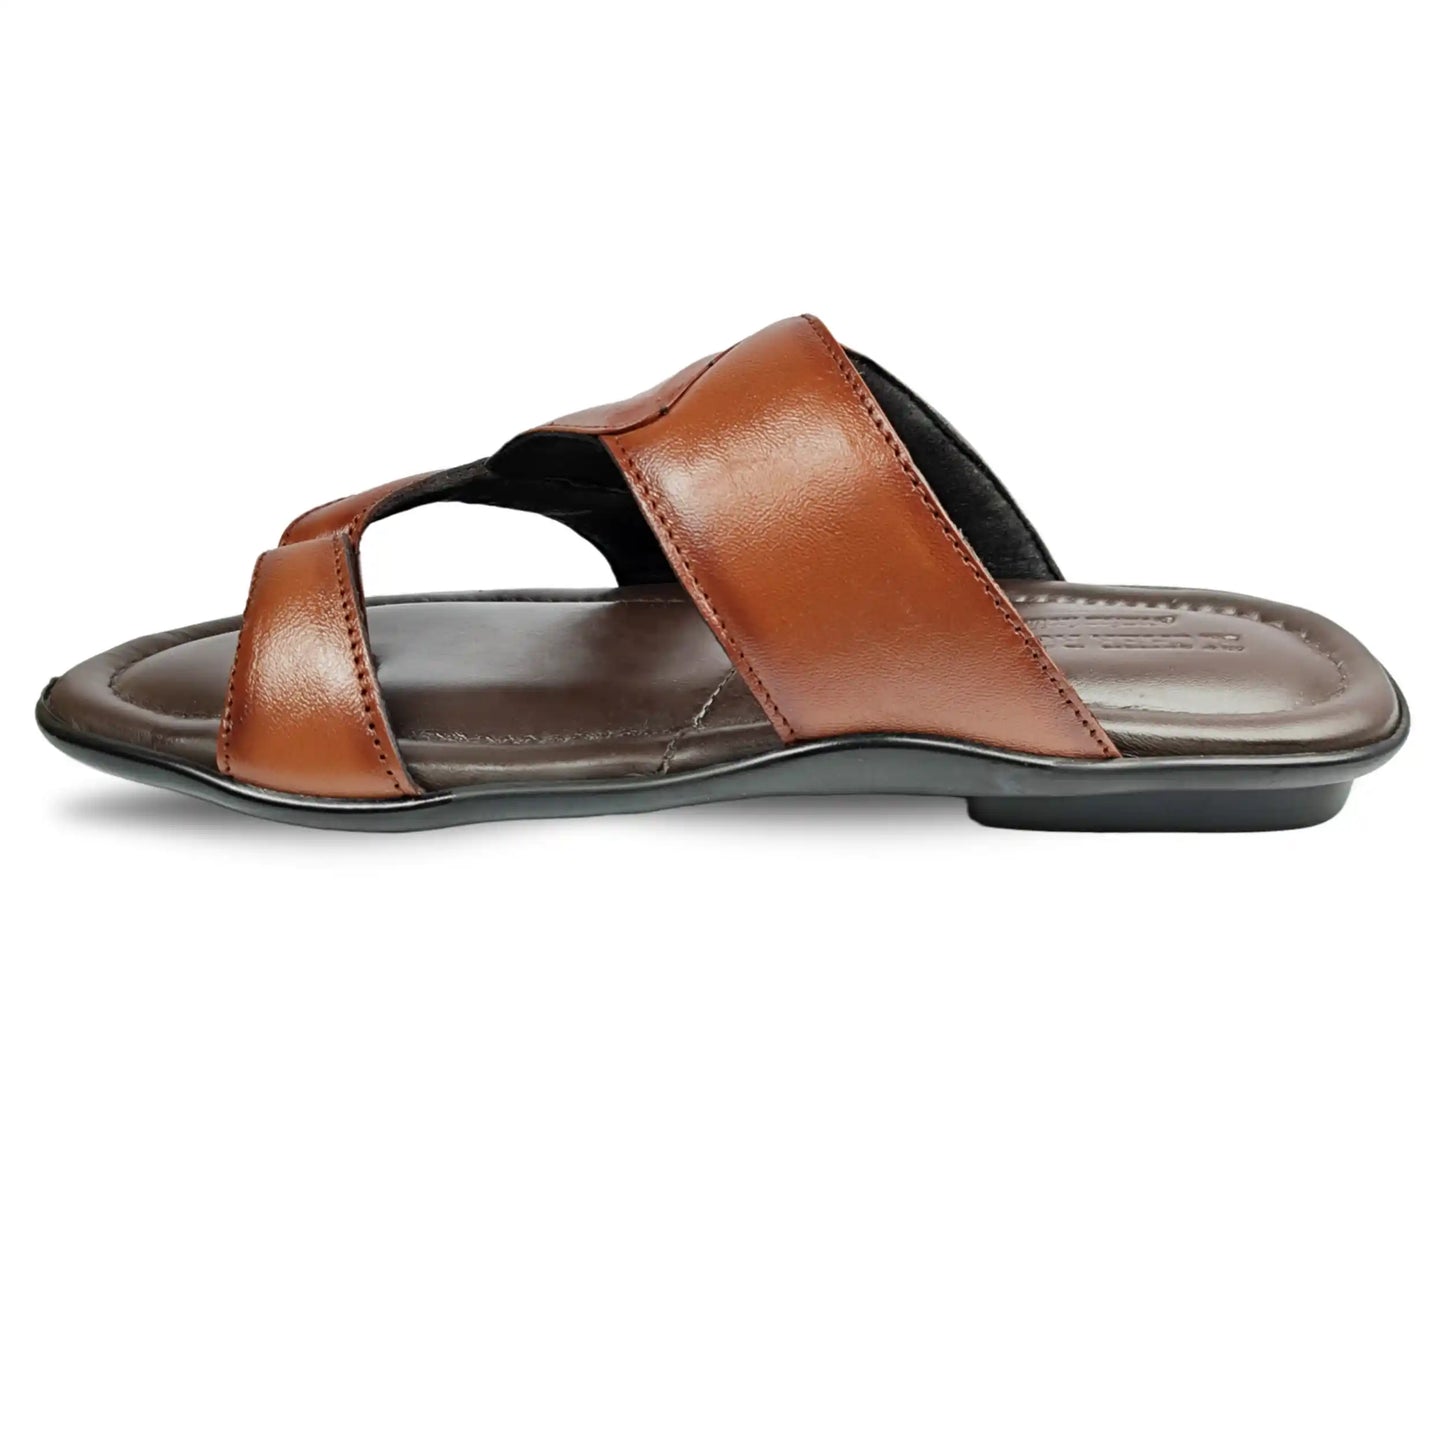 Slider Slippers for Men Genuine Leather Sandals